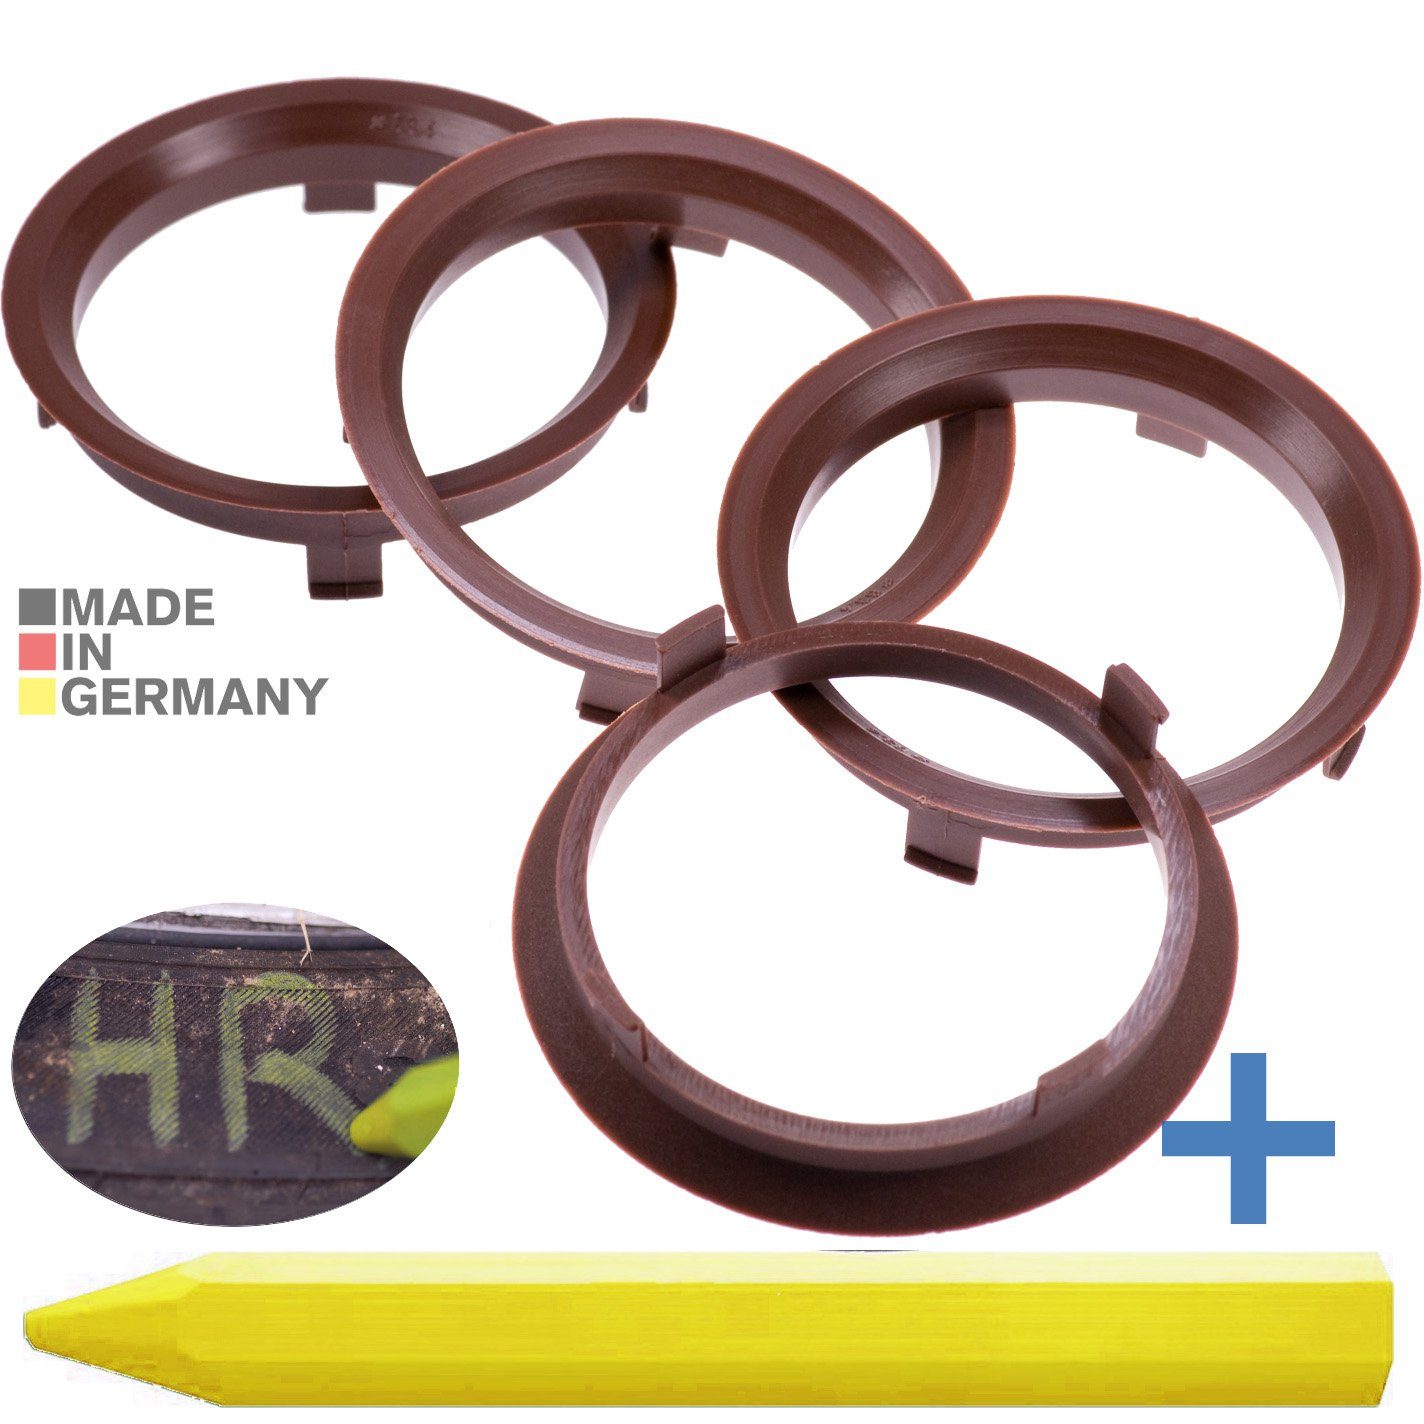 RKC Reifenstift 4X Zentrierringe Braun Felgen Ringe + 1x Reifen Kreide Fett Stift, Maße: 70,1 x 63,4 mm